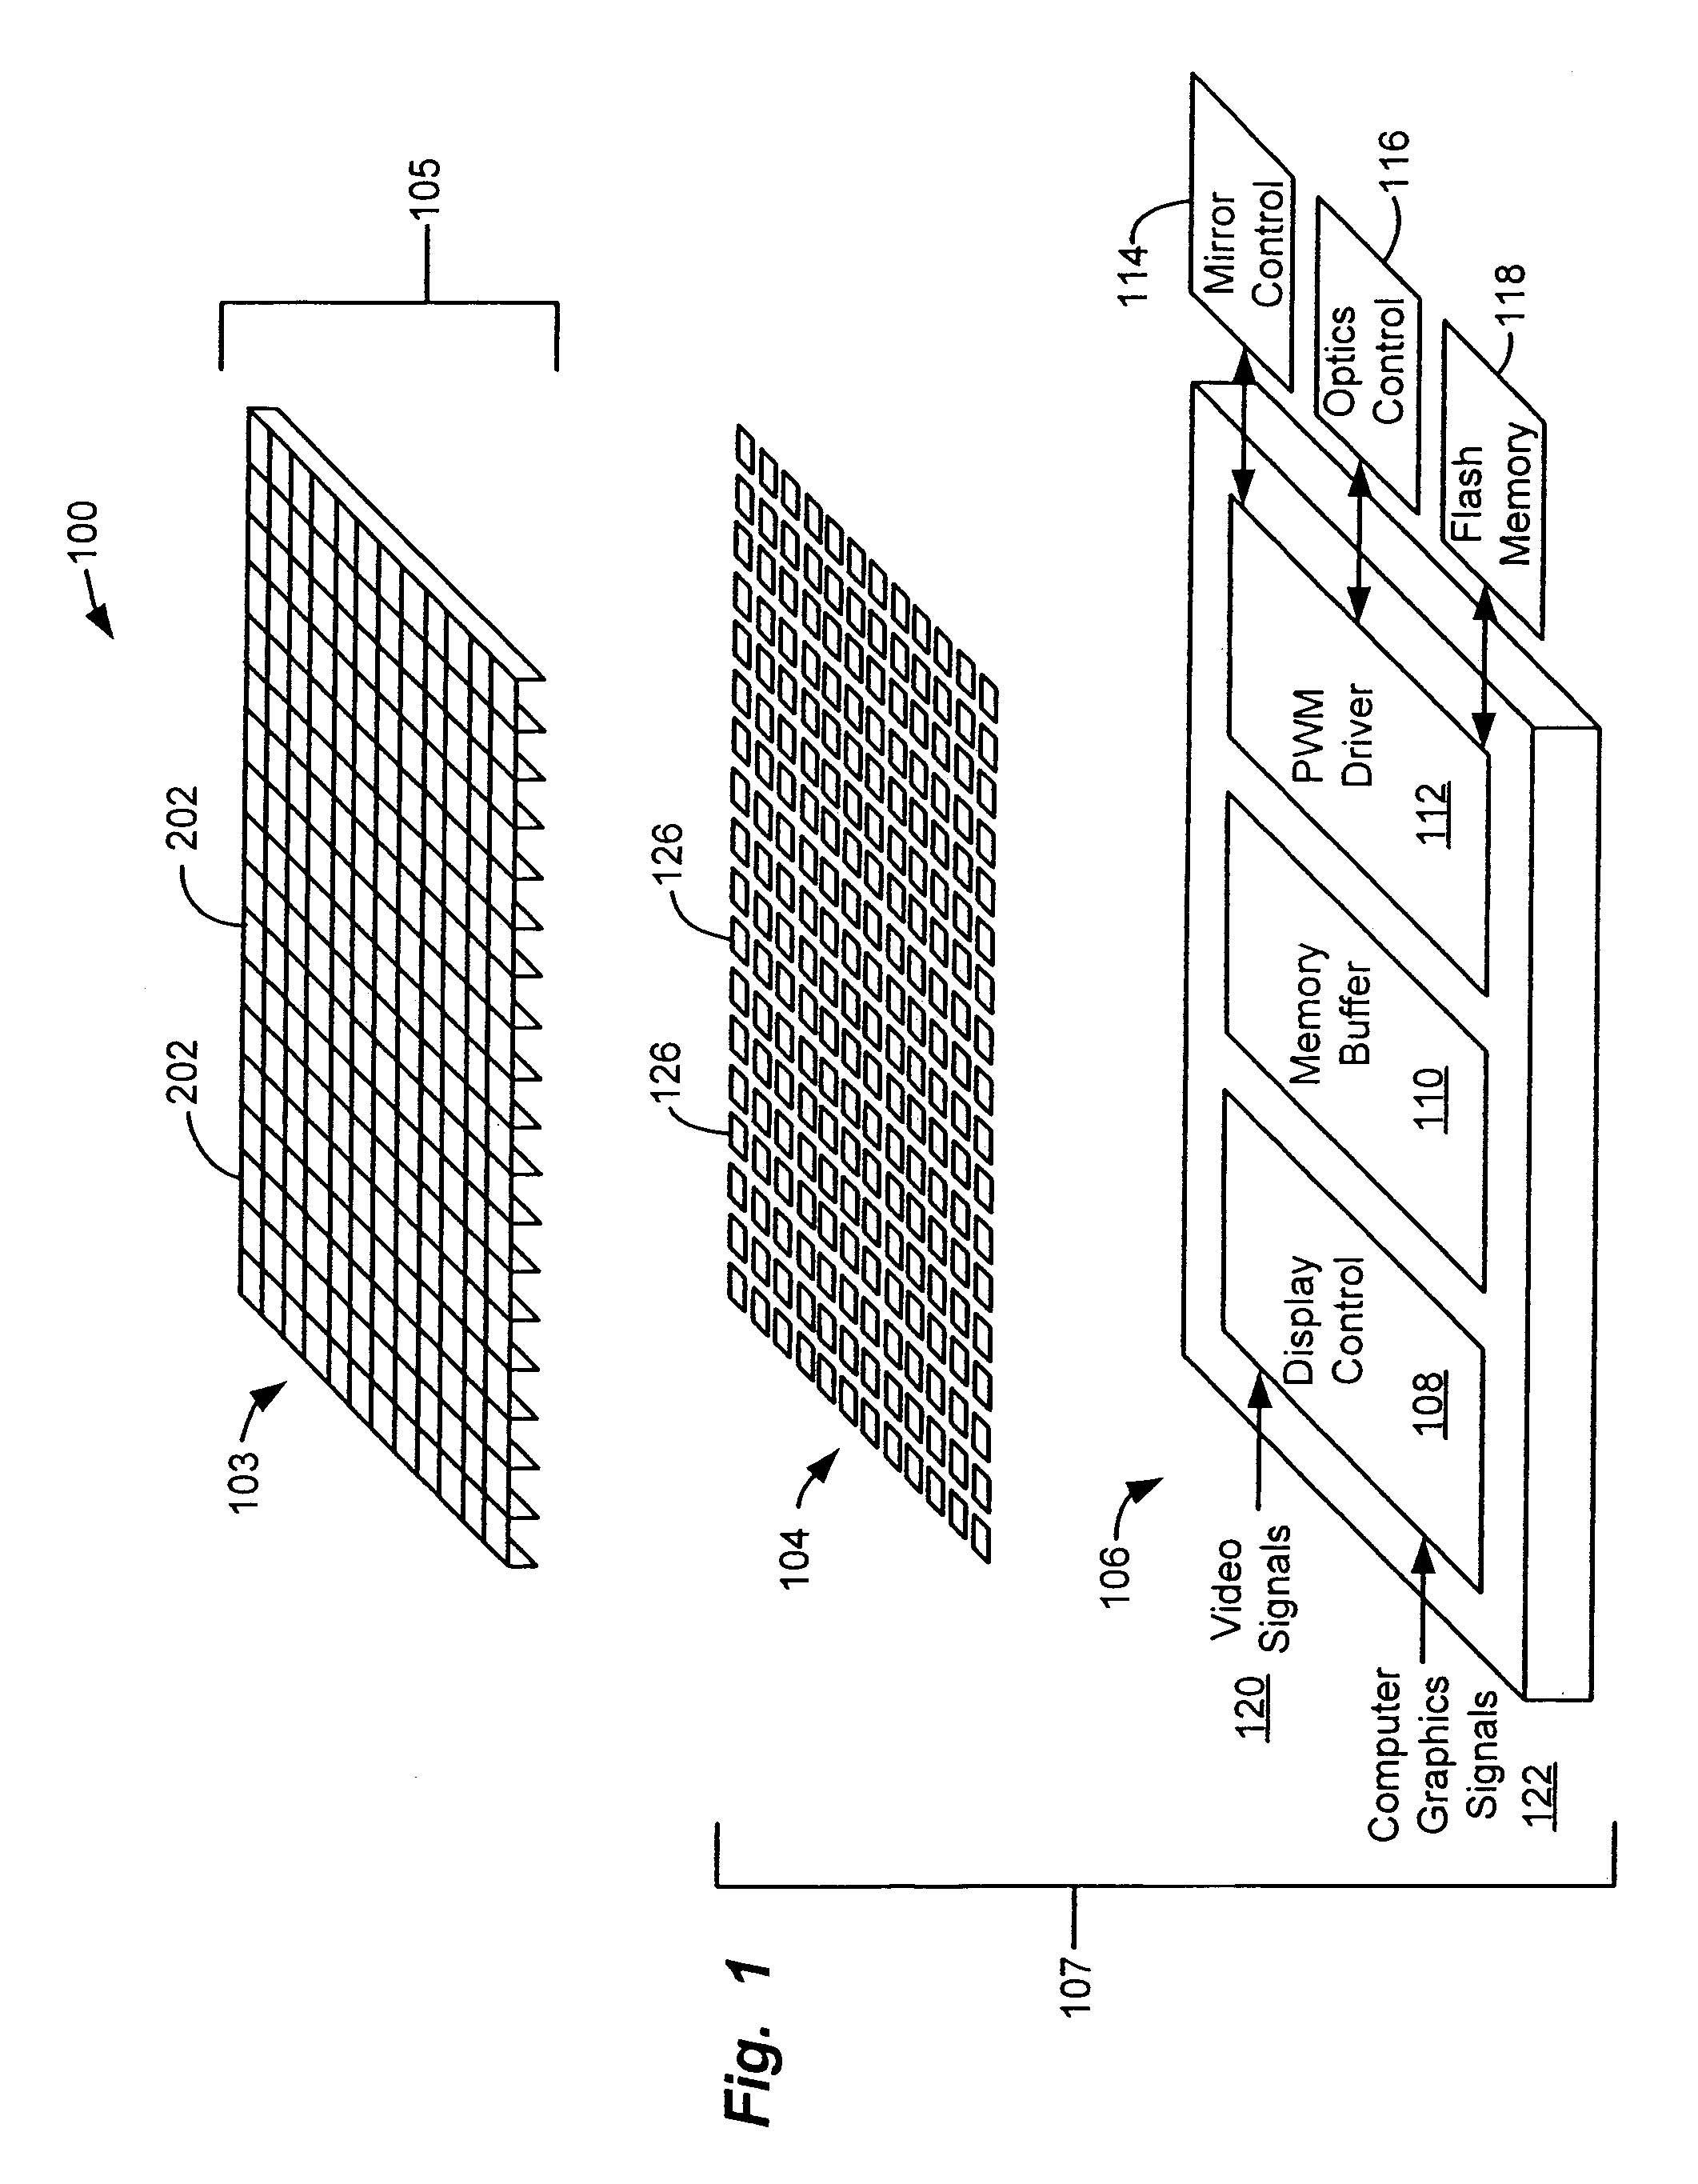 Reflective spatial light modulator having dual layer electrodes and method of fabricating same